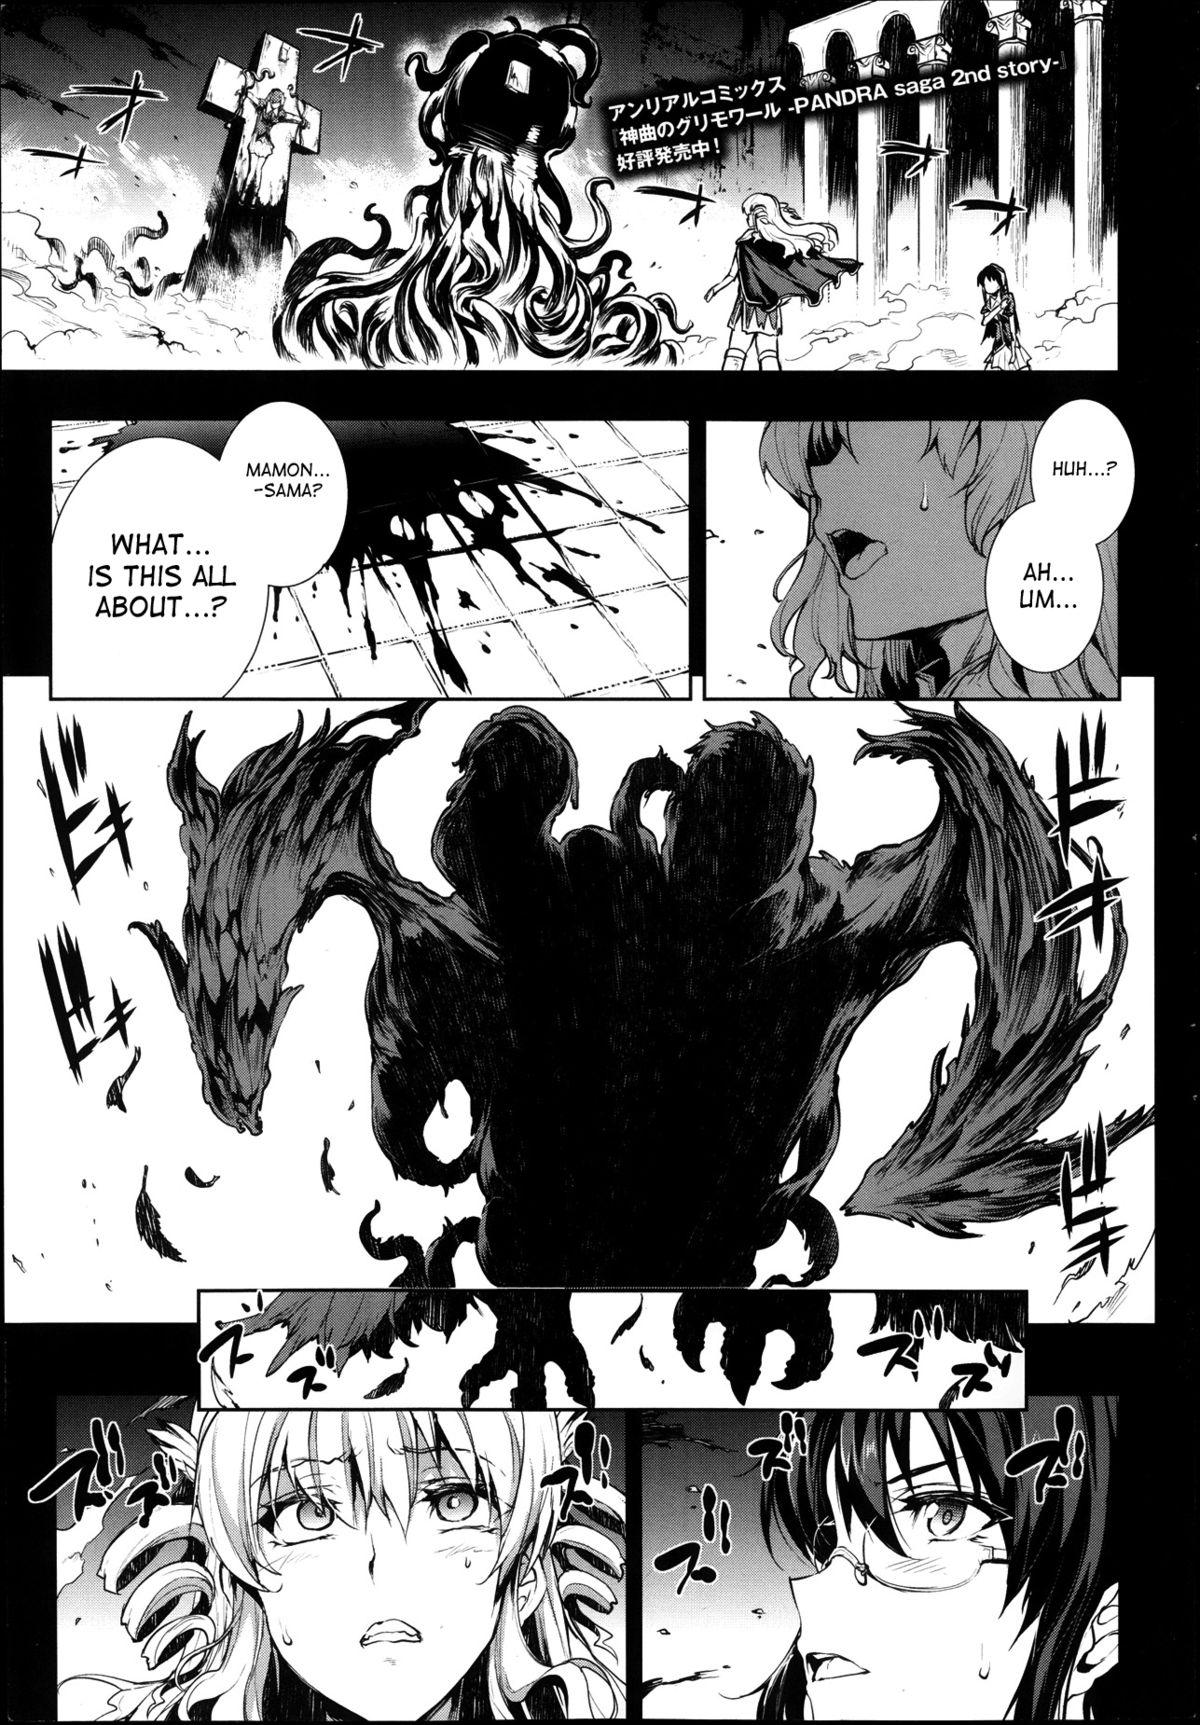 [ERECT TOUCH (Erect Sawaru)] Shinkyoku no Grimoire -PANDRA saga 2nd story- Ch 01-10 + Side Story x 3 [English] [SaHa] 248